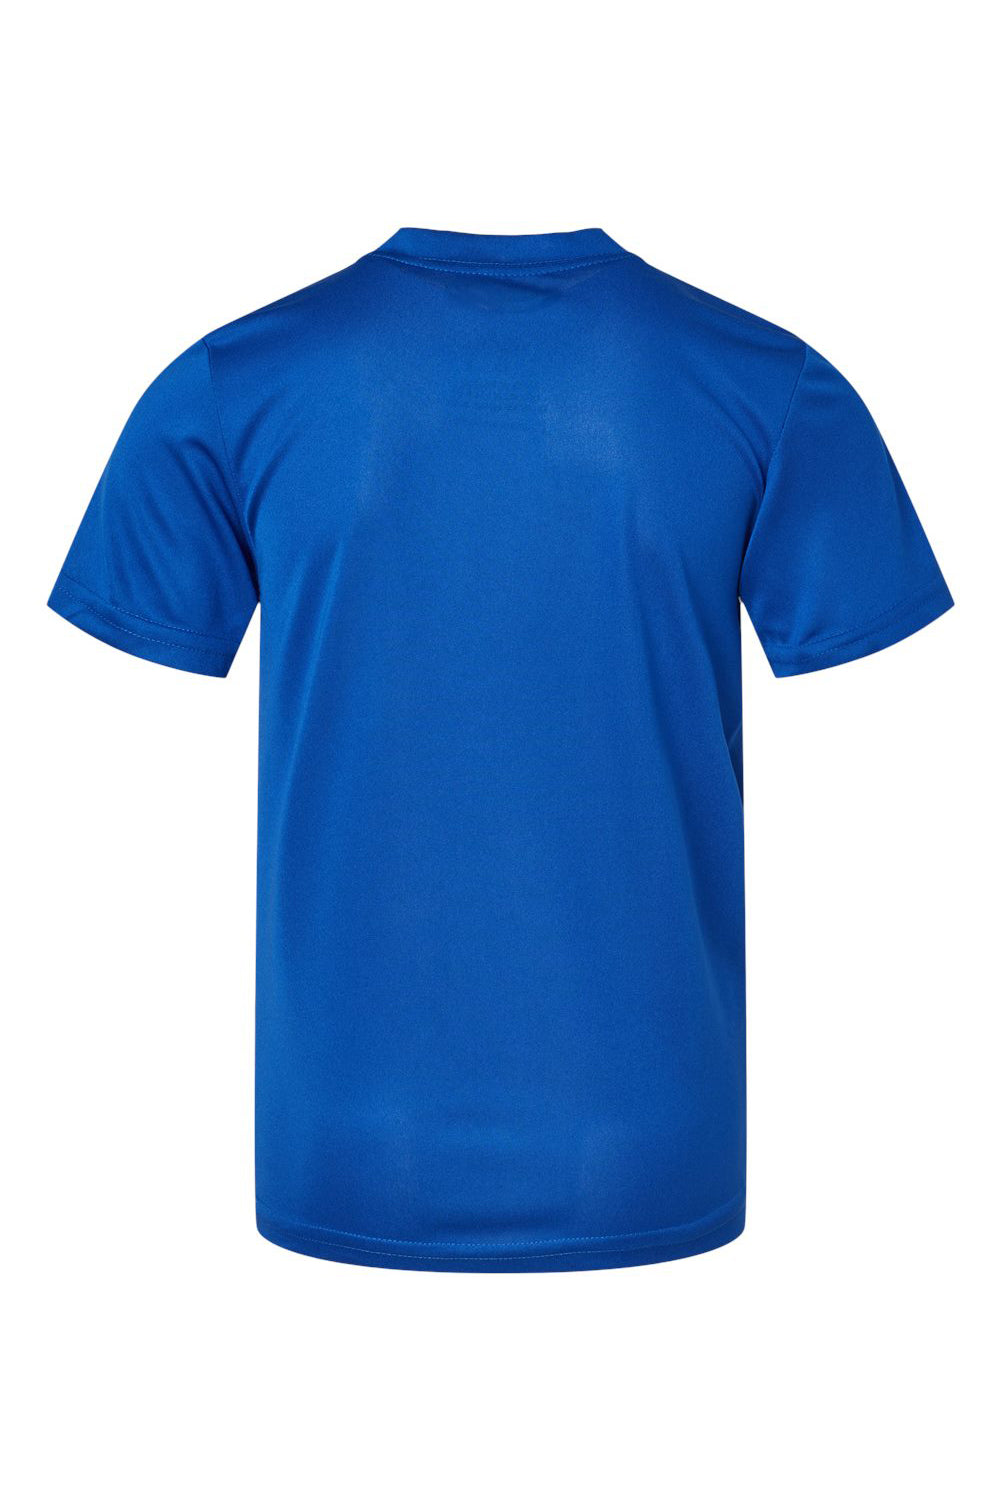 Augusta Sportswear 791 Youth Nexgen Moisture Wicking Short Sleeve Crewneck T-Shirt Royal Blue Flat Back